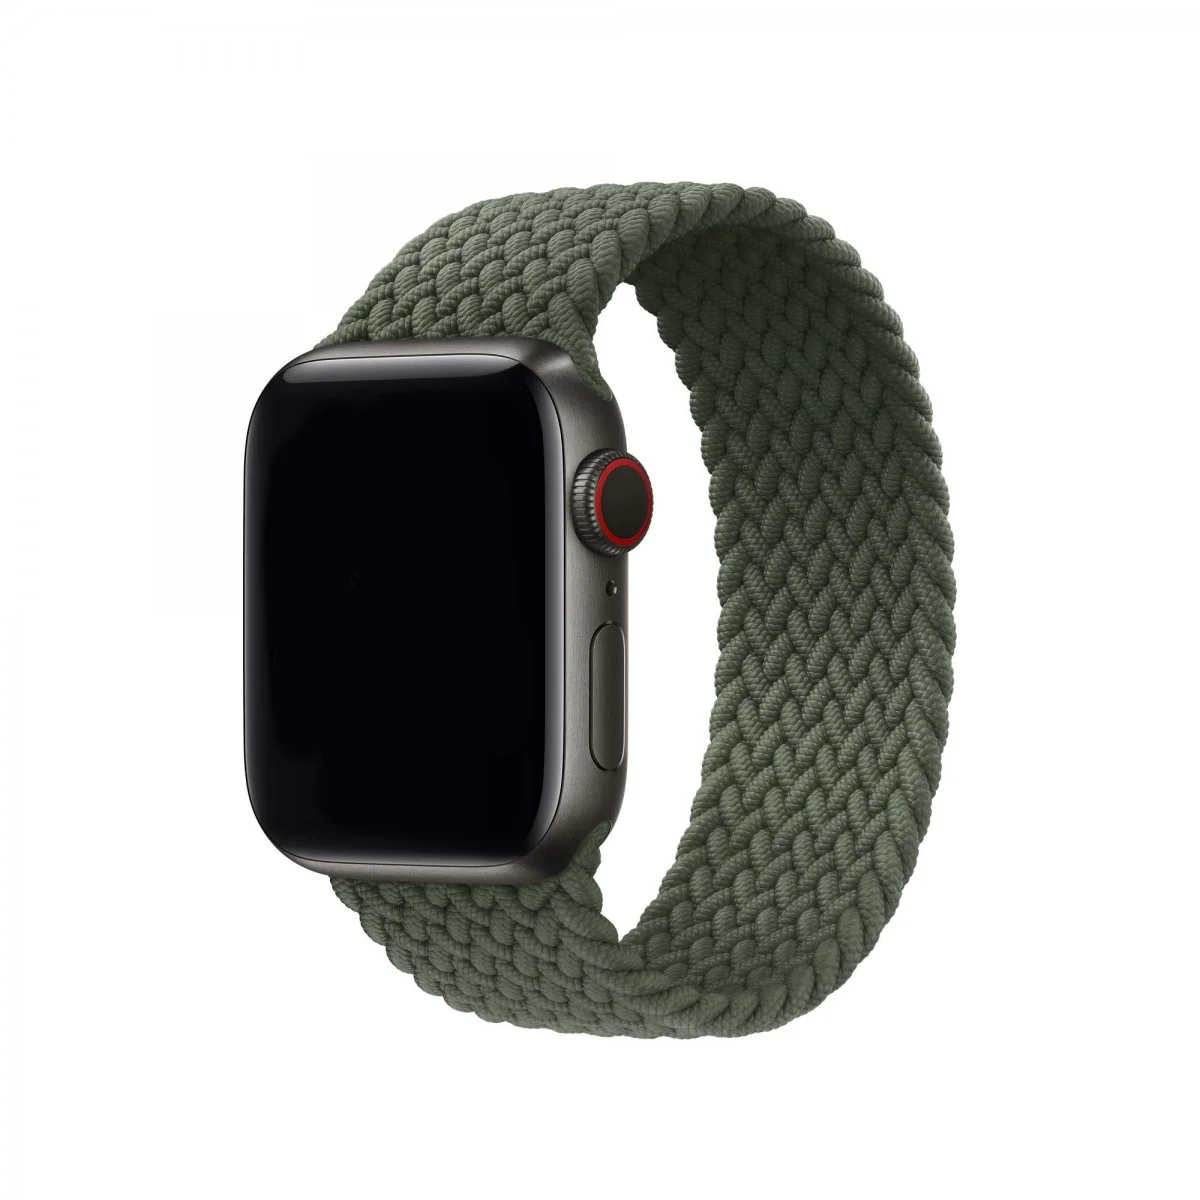 Řemínek iMore Braided Solo Loop Apple Watch Series 1/2/3 42mm - tmavě zelený (XS)